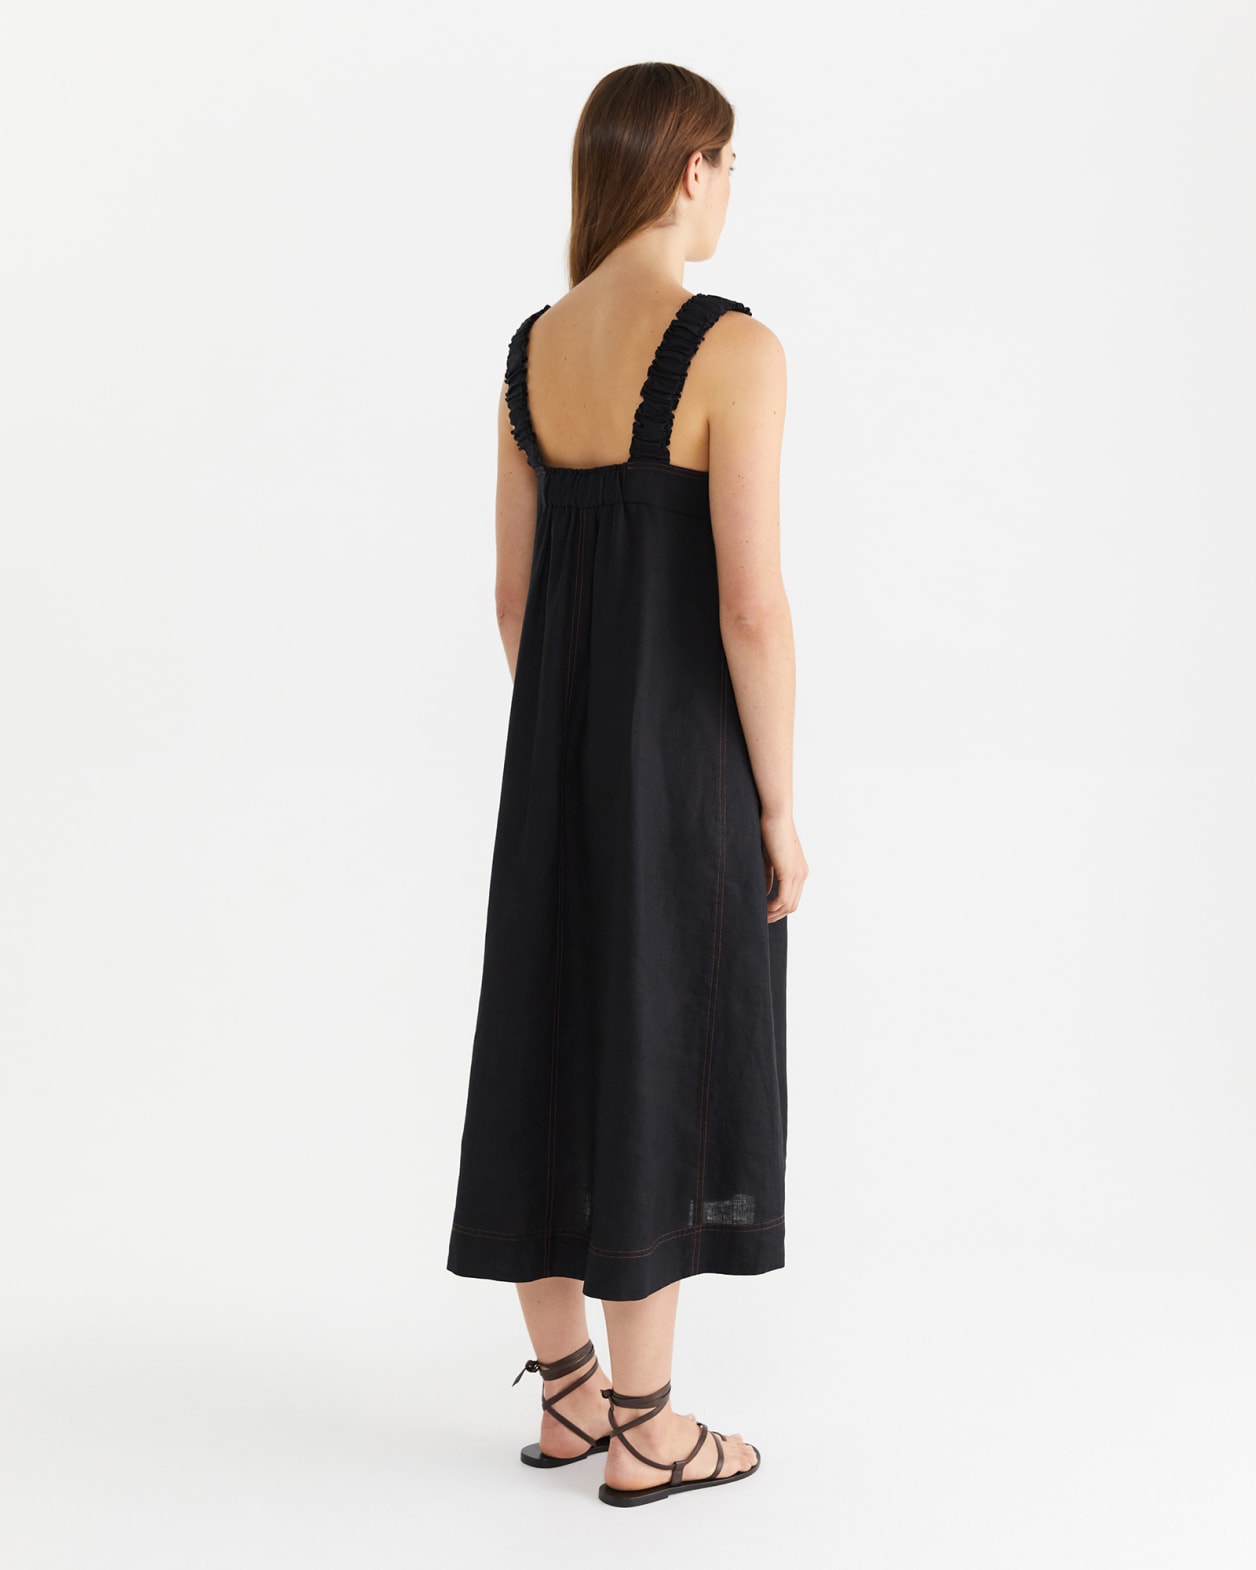 Kiki Elastic Strap Dress | JAG